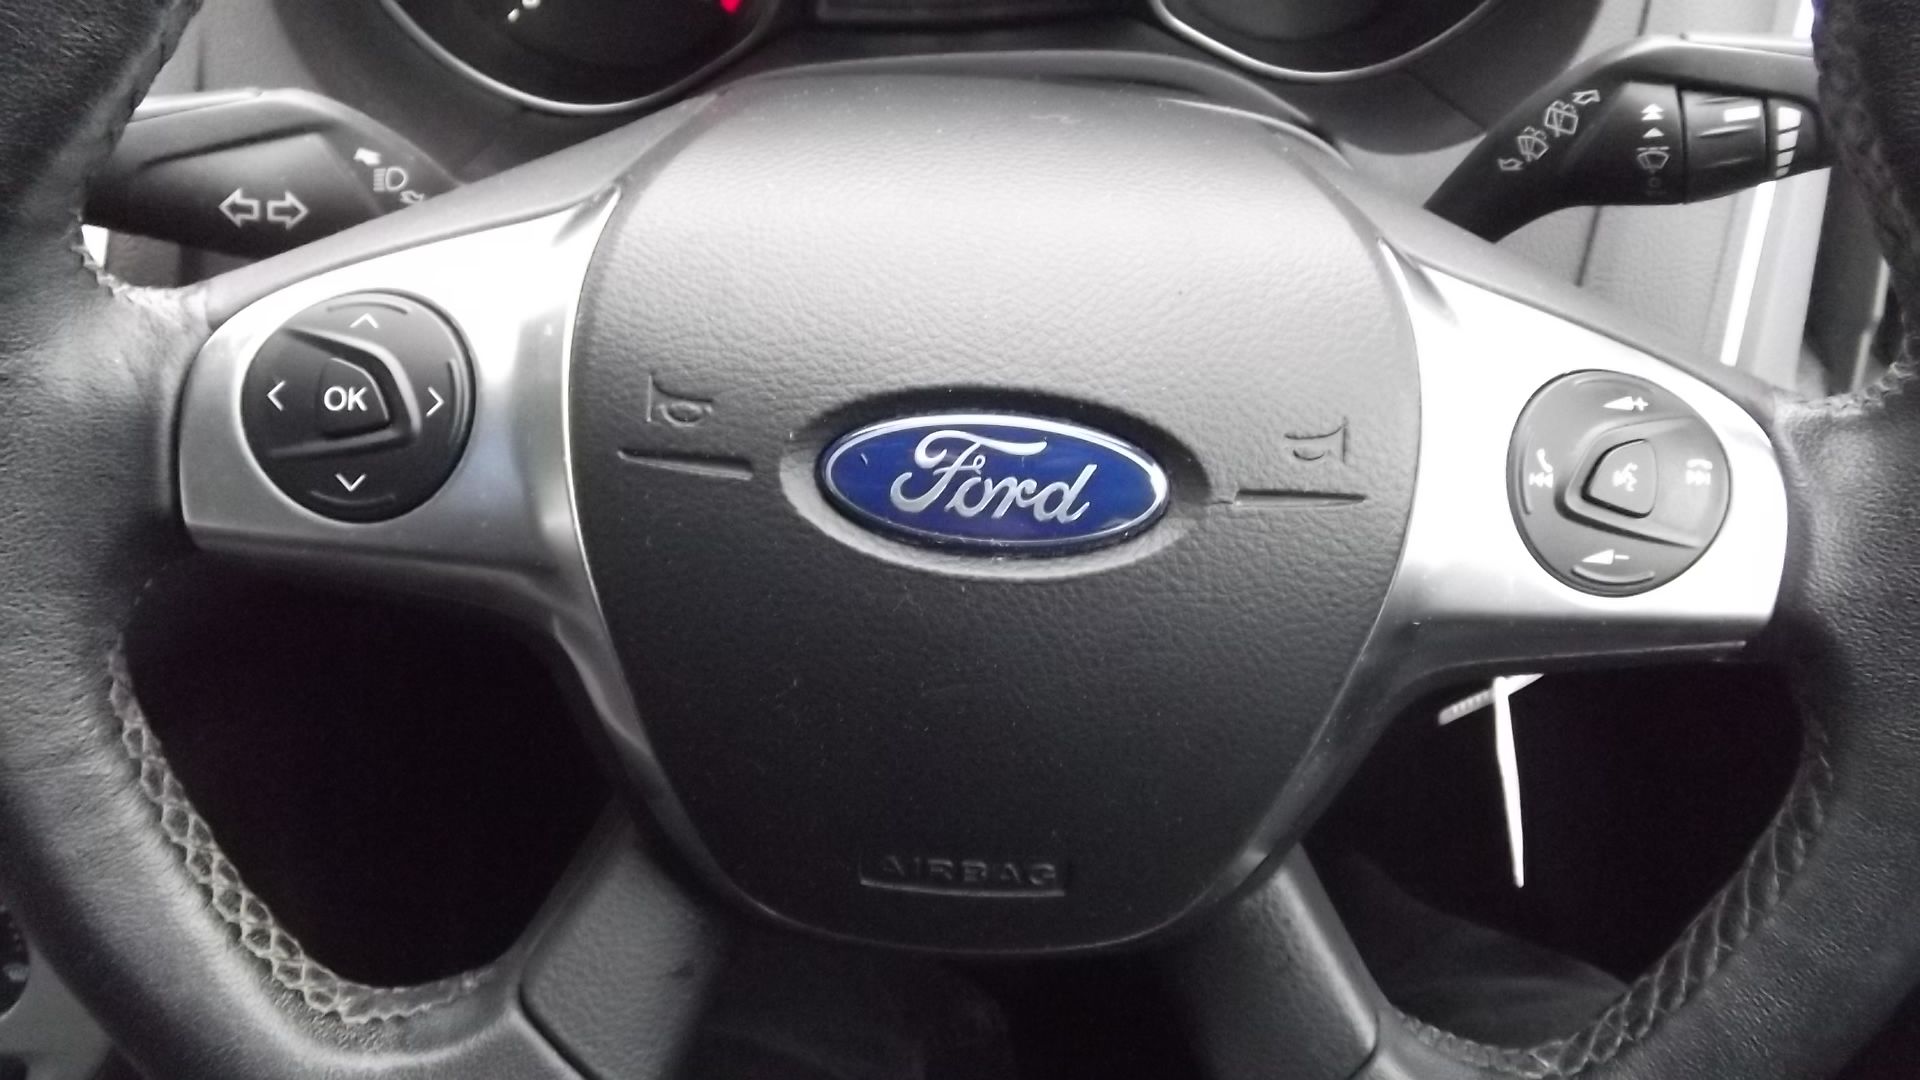 2013 Ford Focus 1.6 TDCi 115 Zetec 5dr Hatchback - CL505 - NO VAT ON THE HAMMER - Location: Corby, N - Image 10 of 21